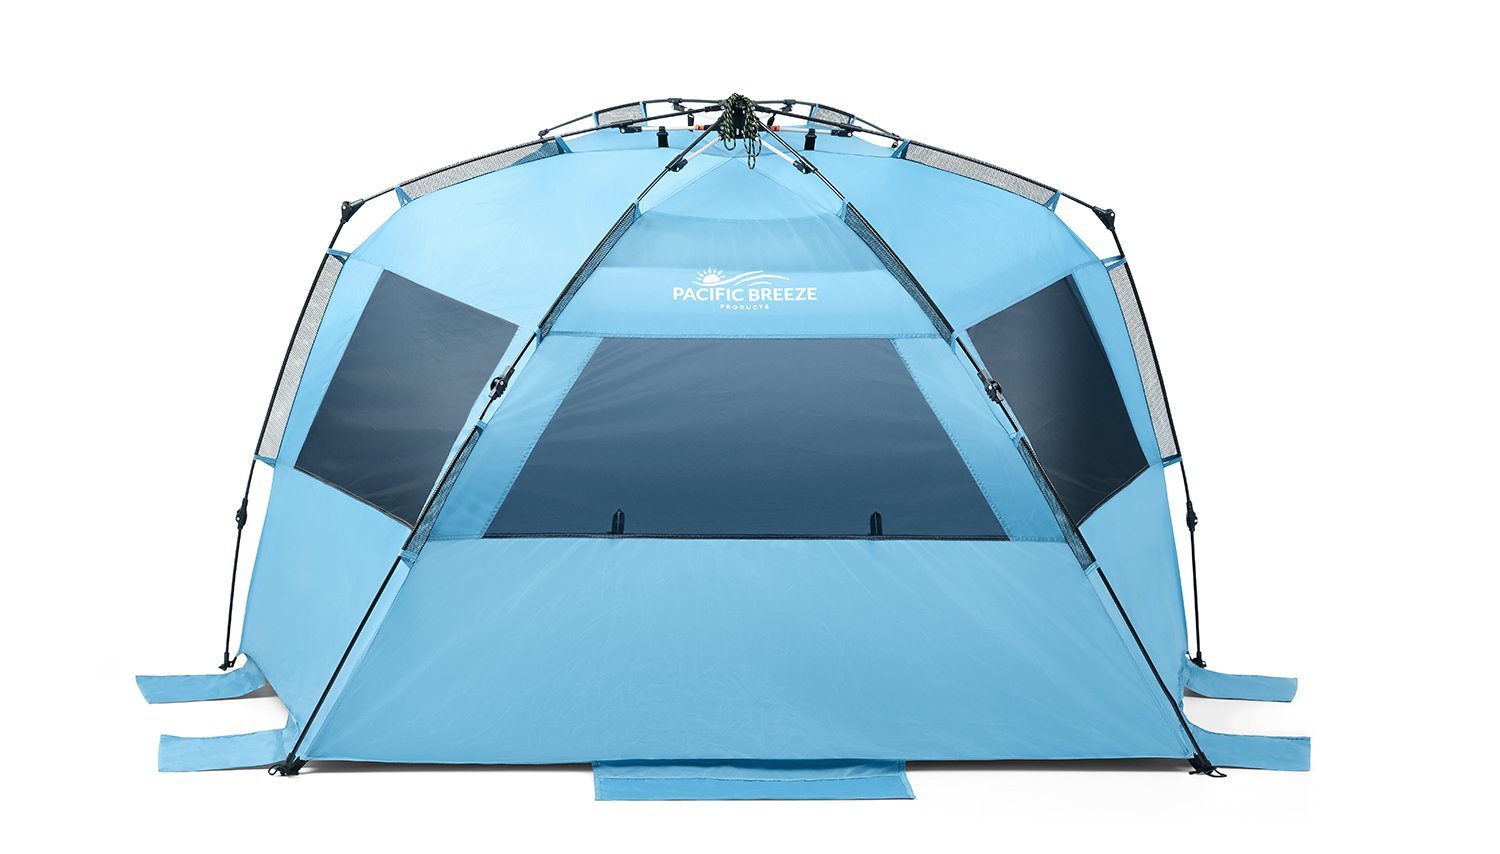  Pacific Breeze Easy Up Beach Tent Deluxe, $99 @amazon.com